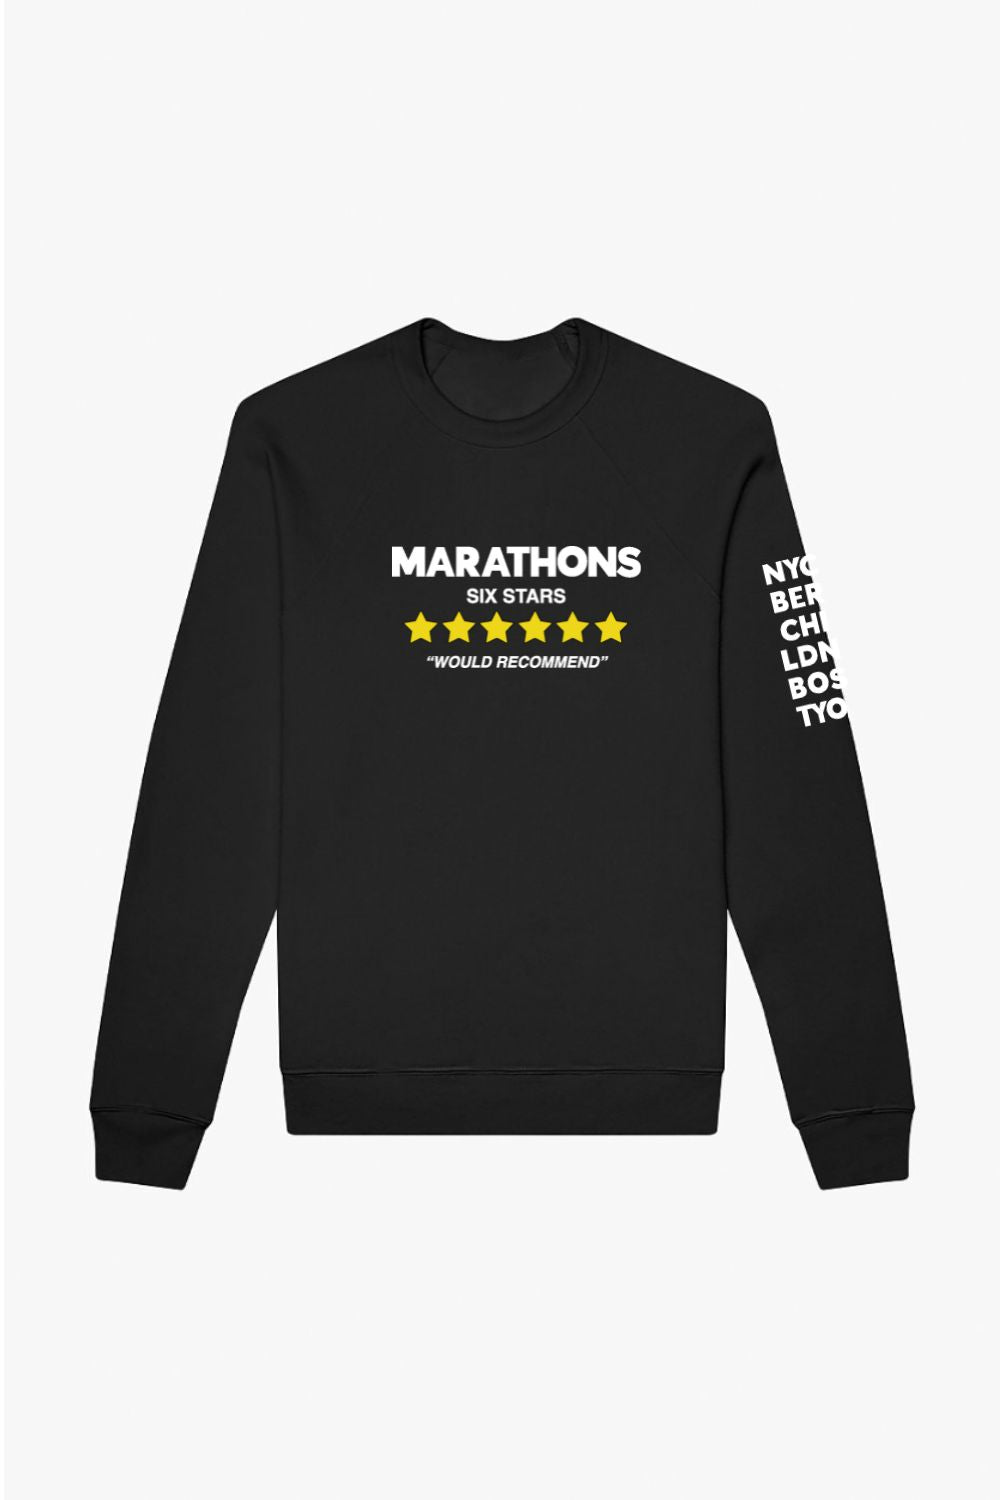 Marathons, Would Recommend Sweatshirt